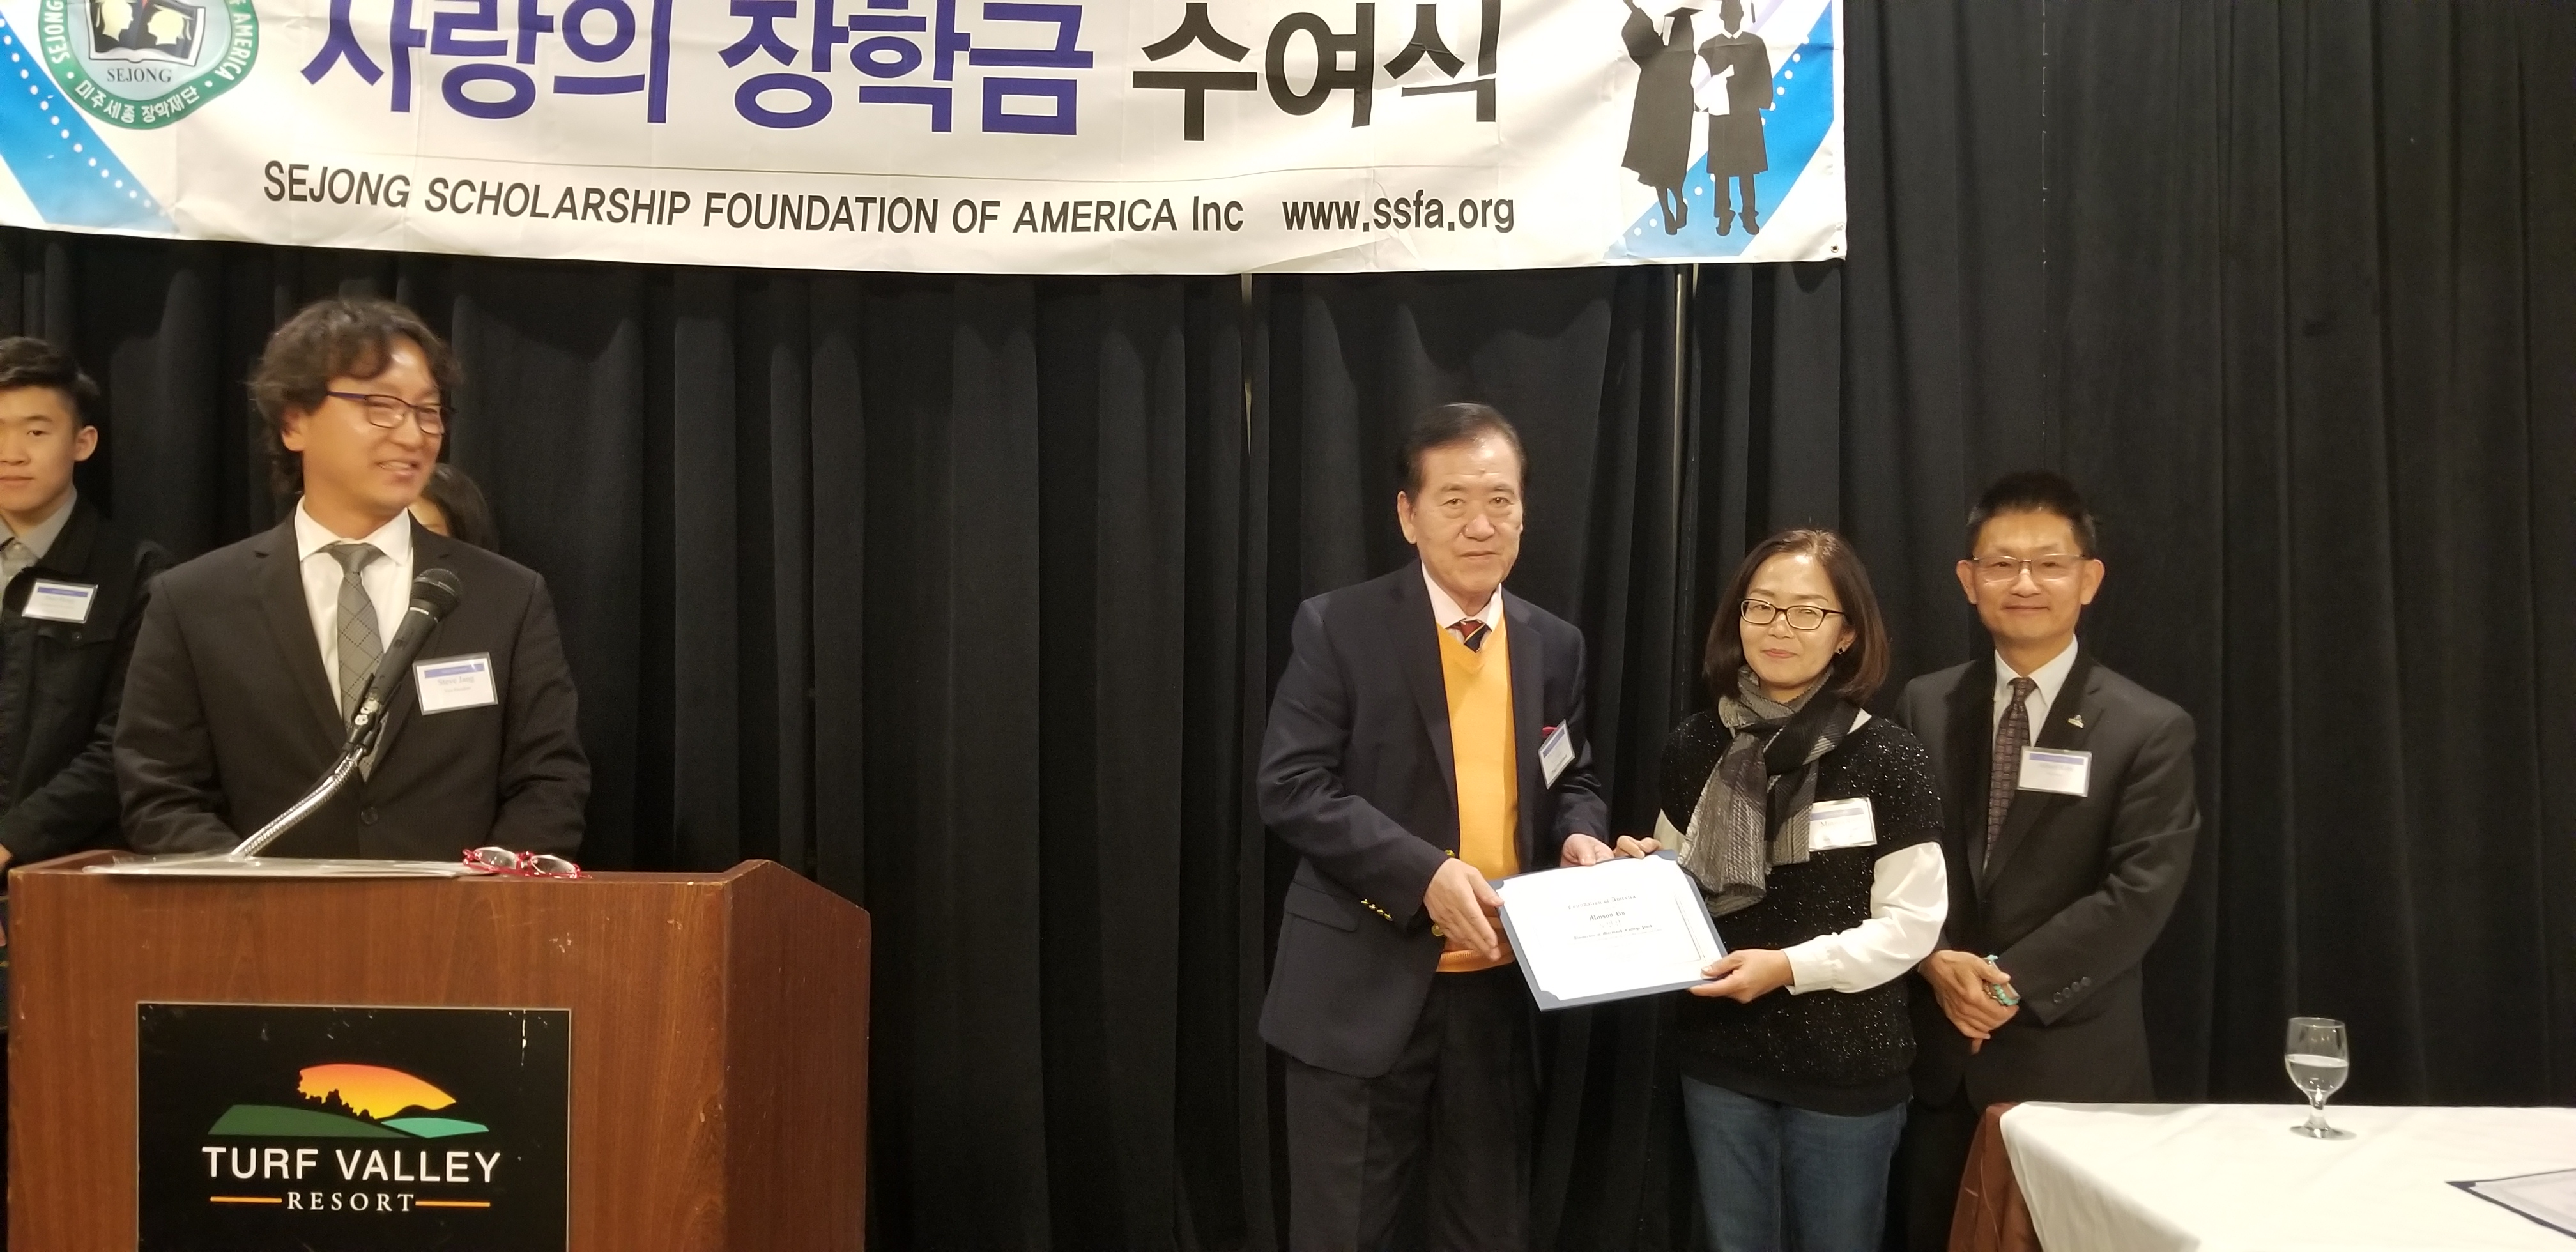 2019 Sejong Scholarship Foundation of America (SSFA) Scholarship Award Ceremony #4